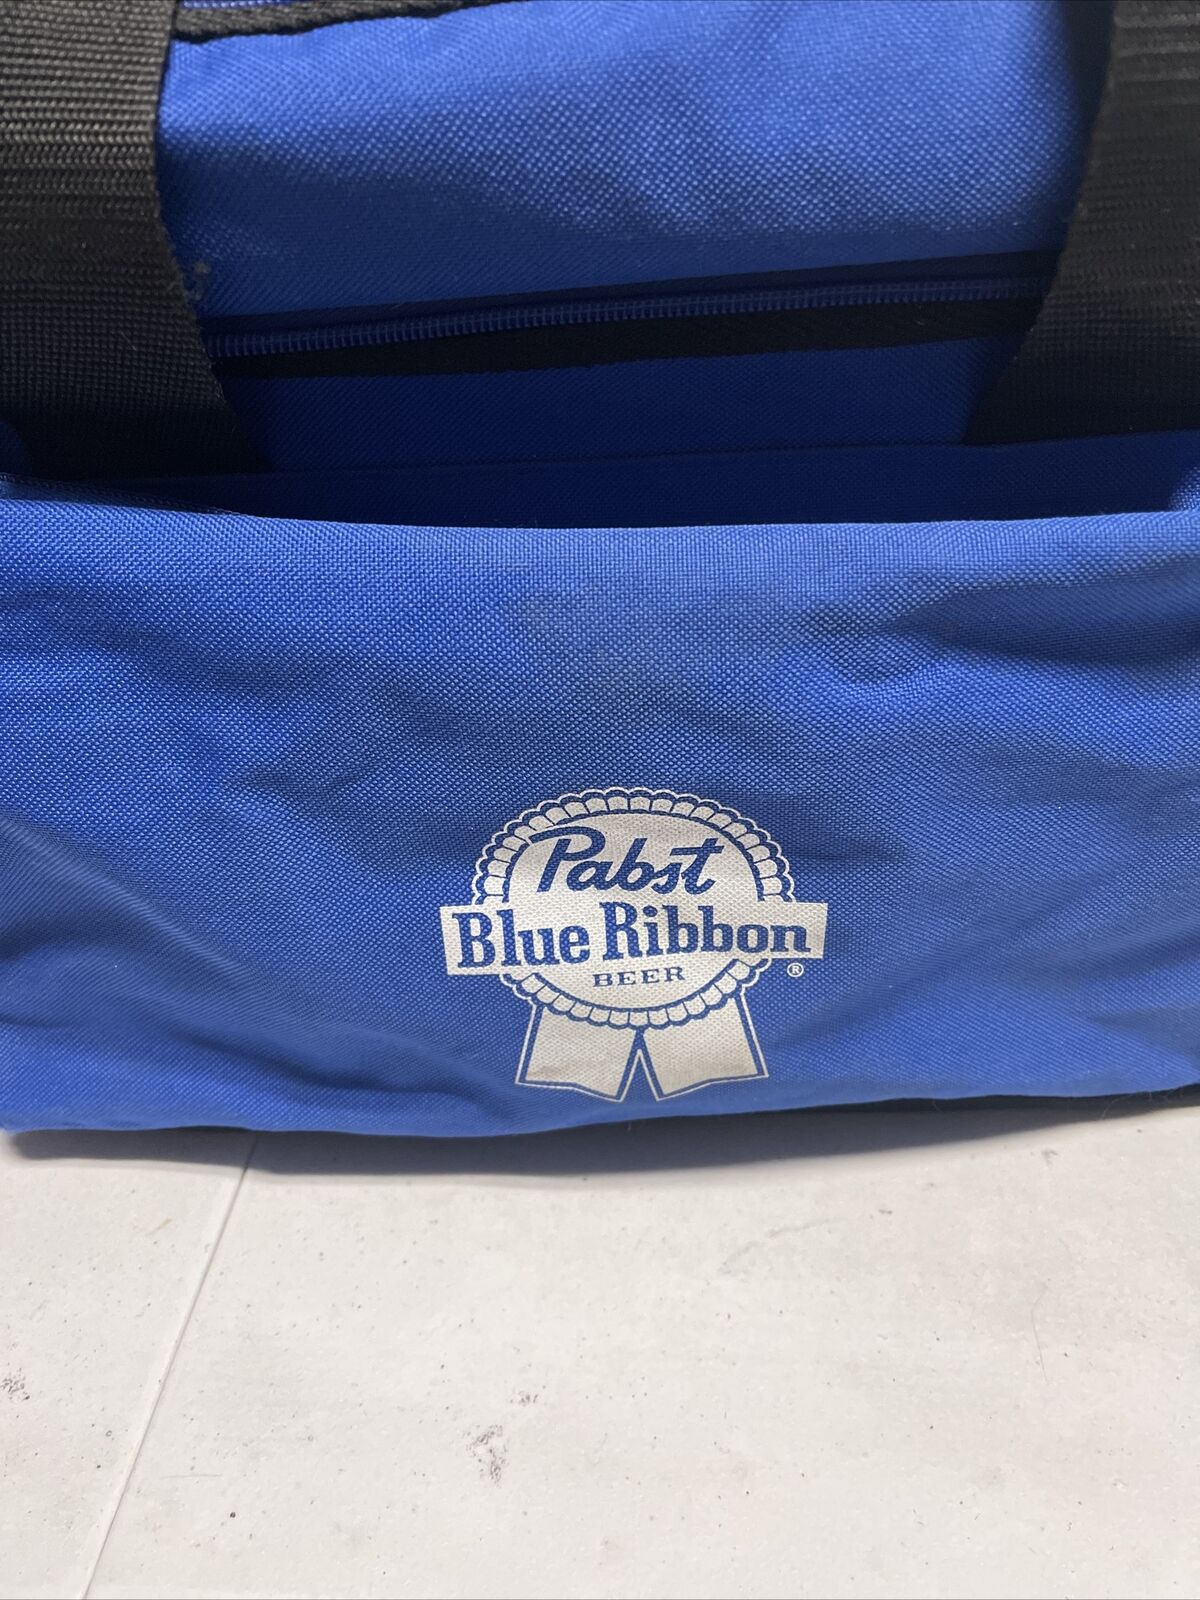 PBR Pabst Blue Ribbon Cooler GUC See Description